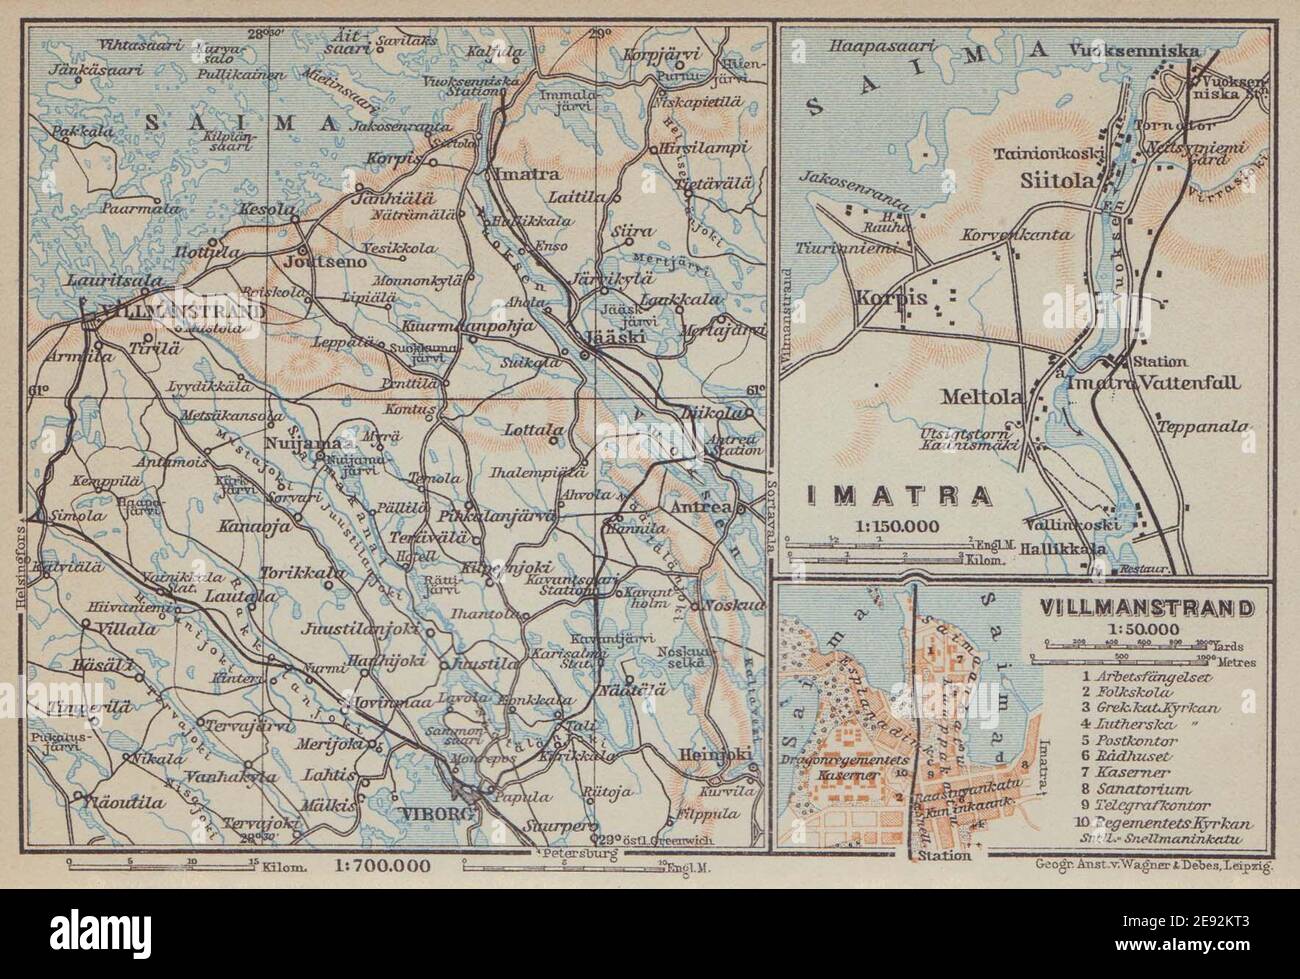 Imatra / Lappeenranta (Villmanstrand). Finland / Russia. BAEDEKER 1914 old map Stock Photo